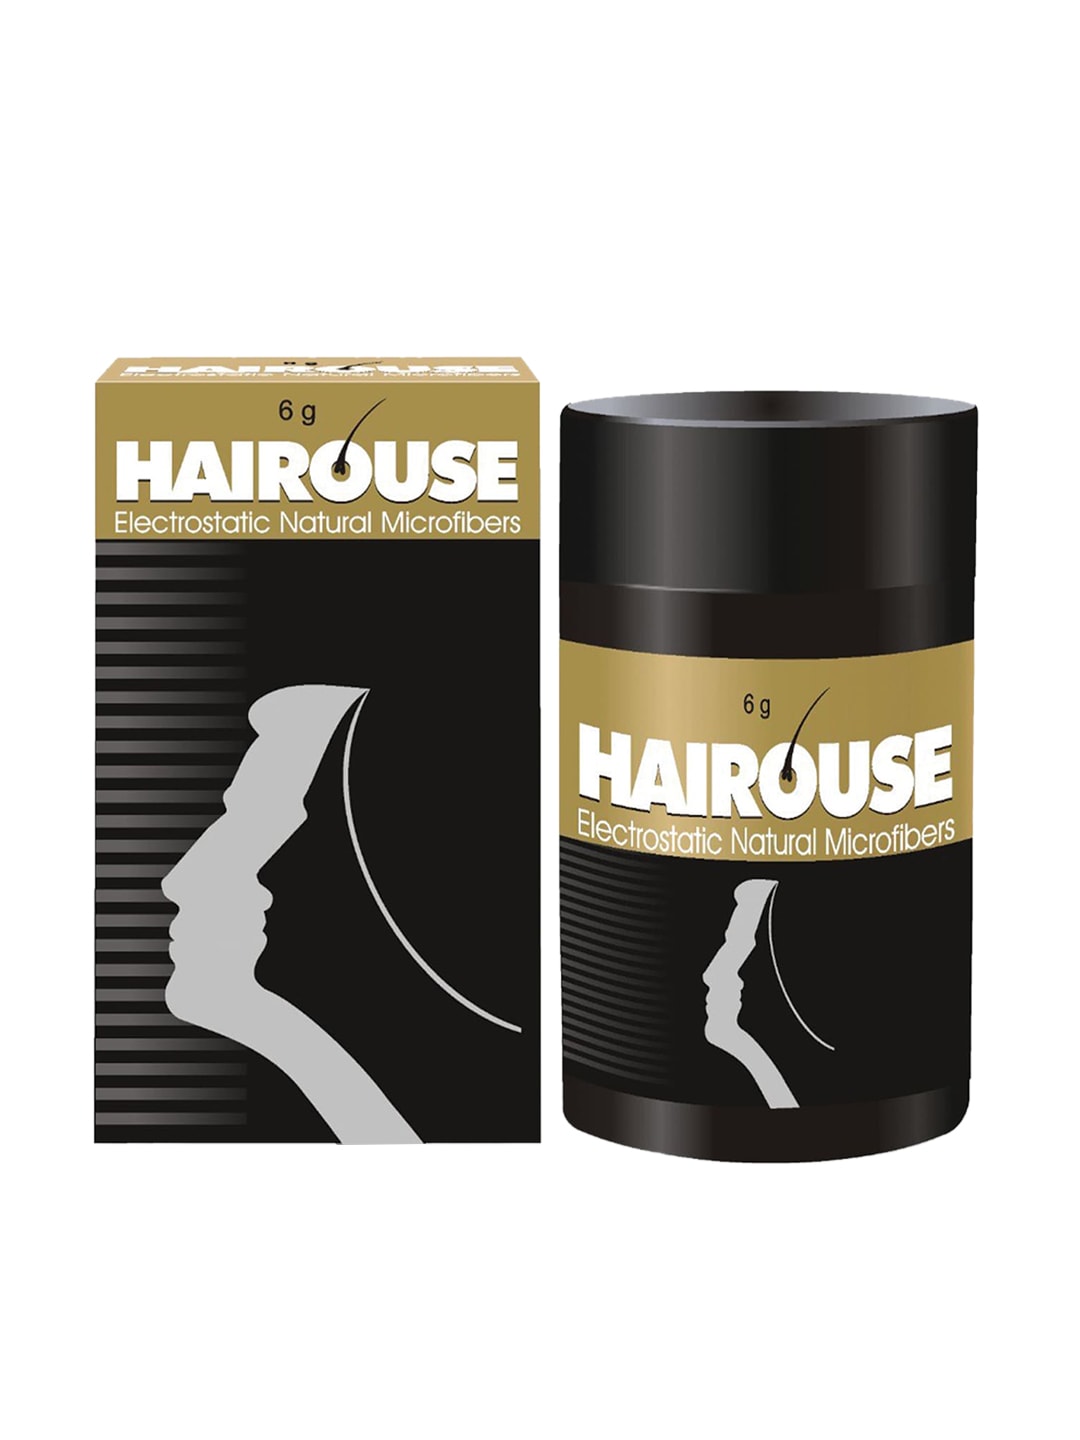 HAIROUSE Unisex Medium Brown Natural Hair Building Microfibers 6 g Price in India